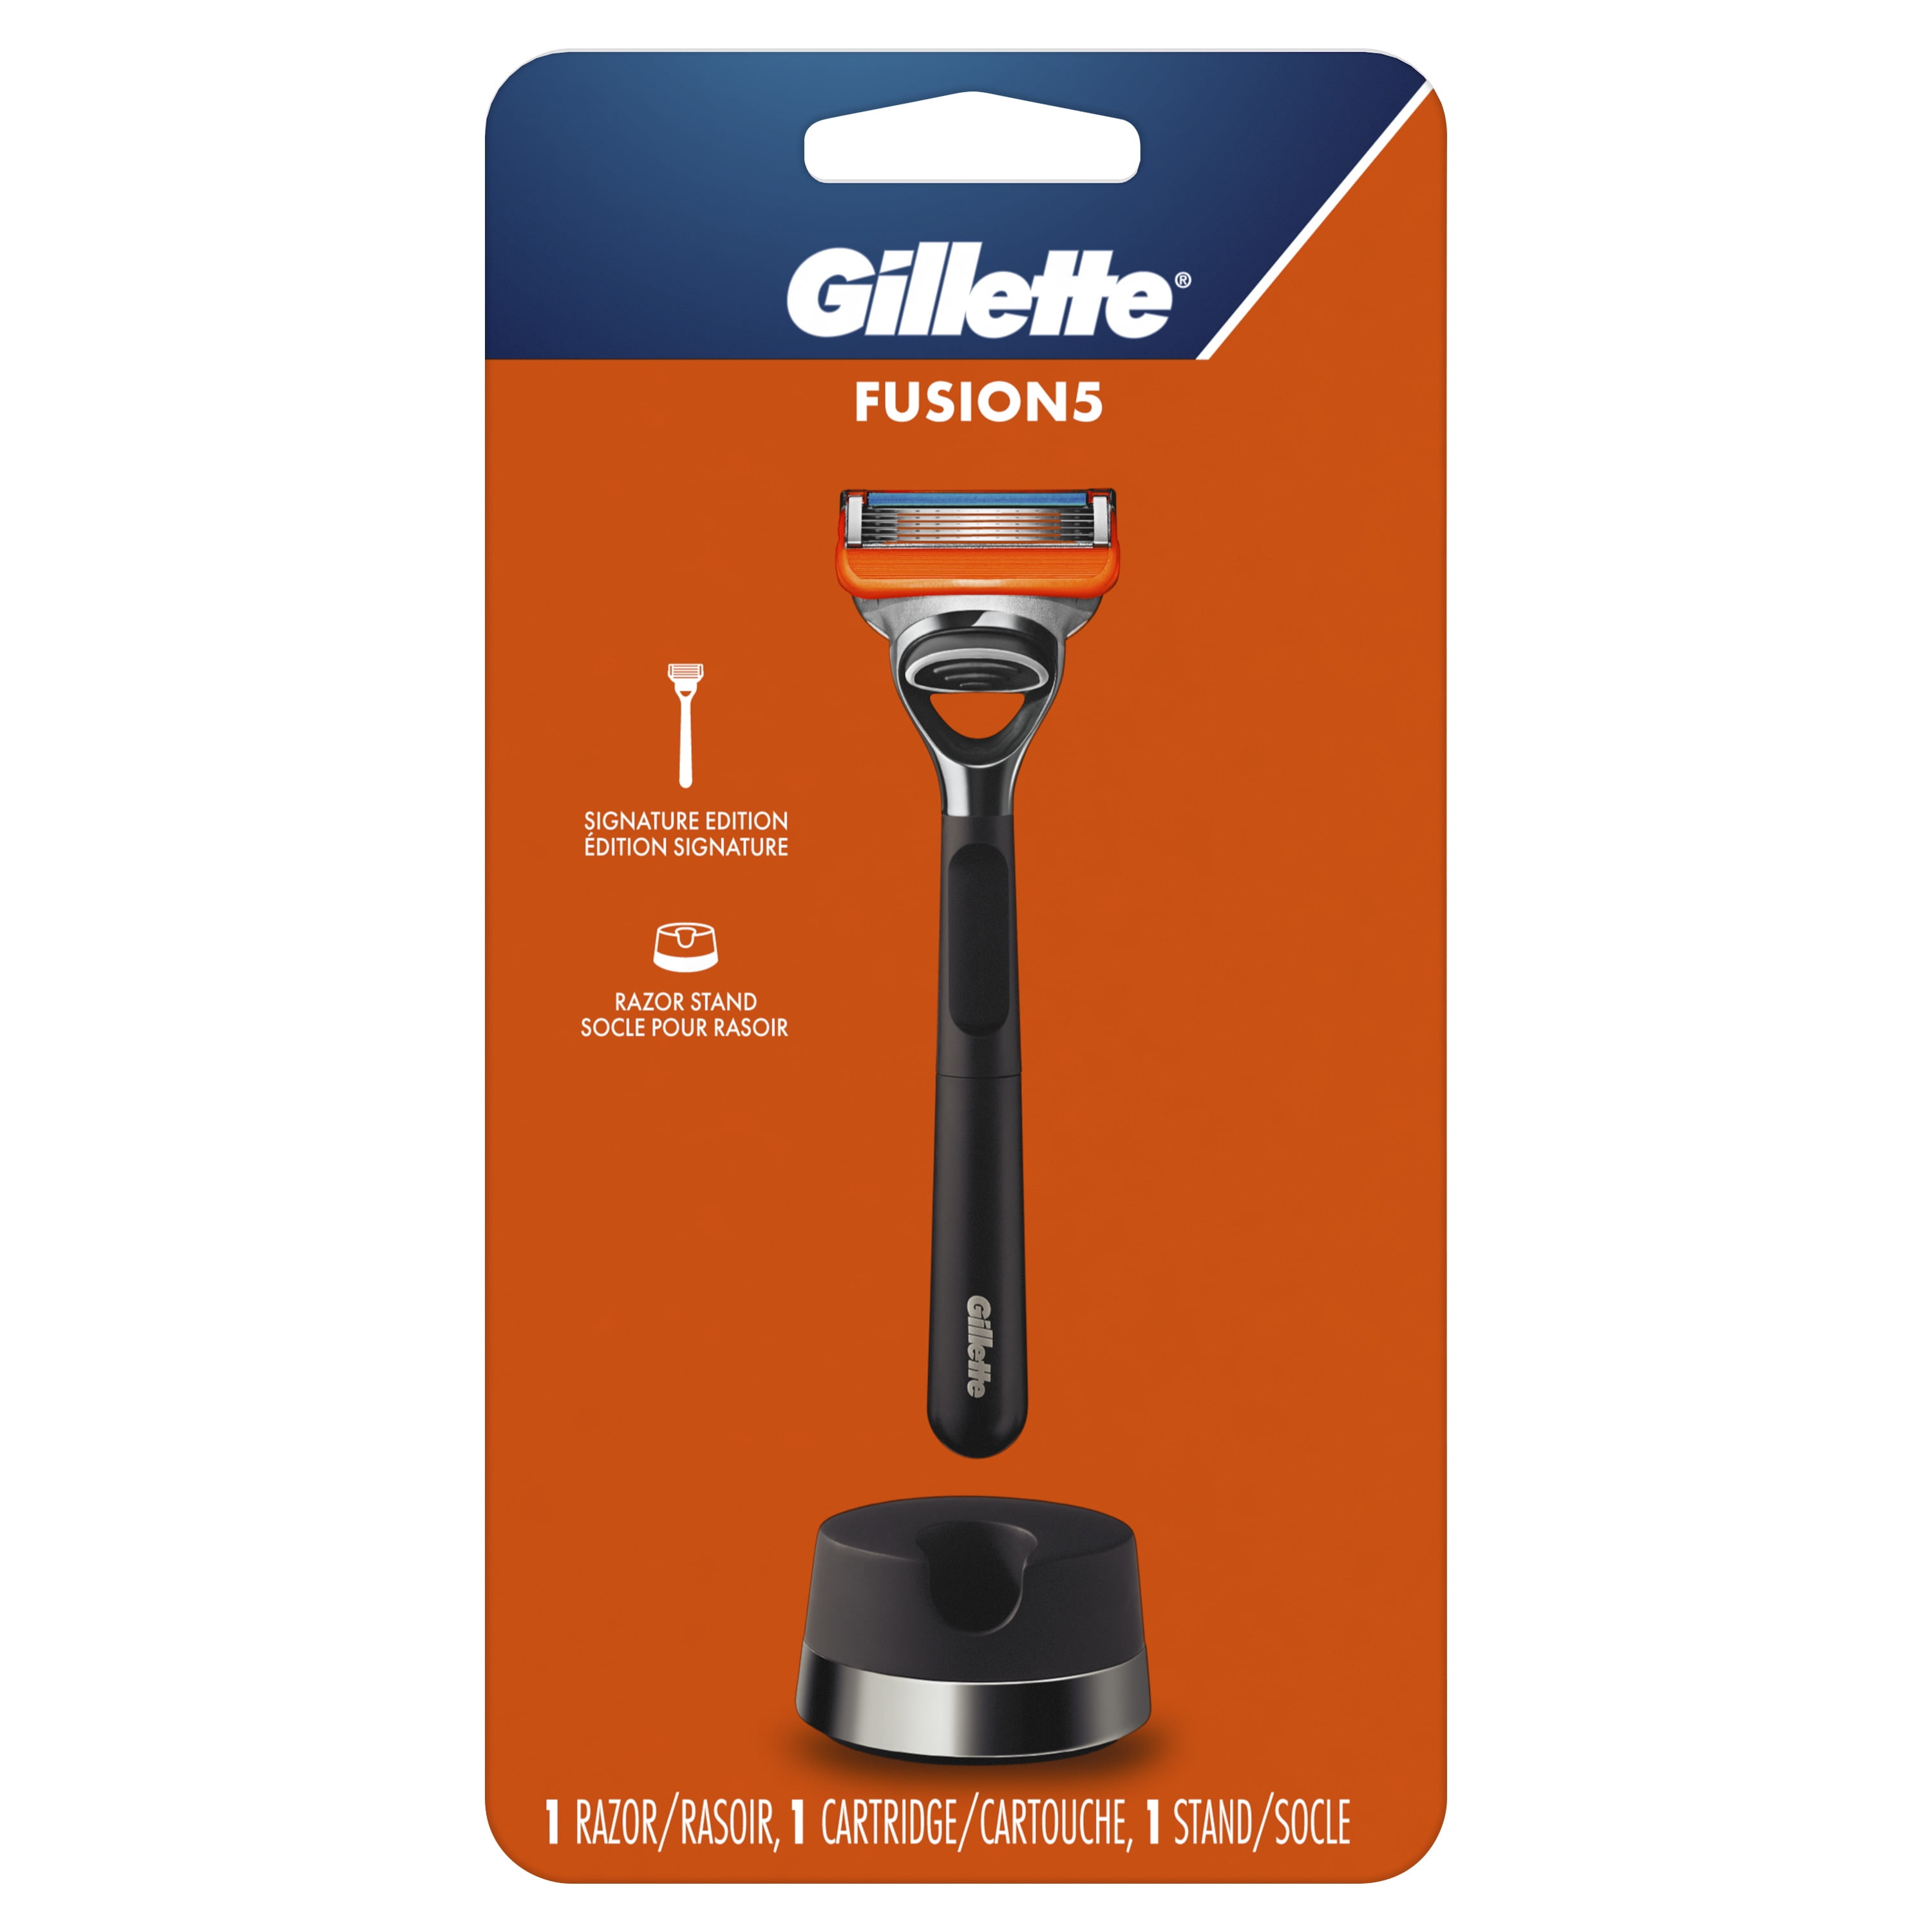 Gillette Fusion5 Signature Edition Razor Handle, Stand & 1 Blade Refill $7.25 + Free S&H w/ Walmart+ or $35+